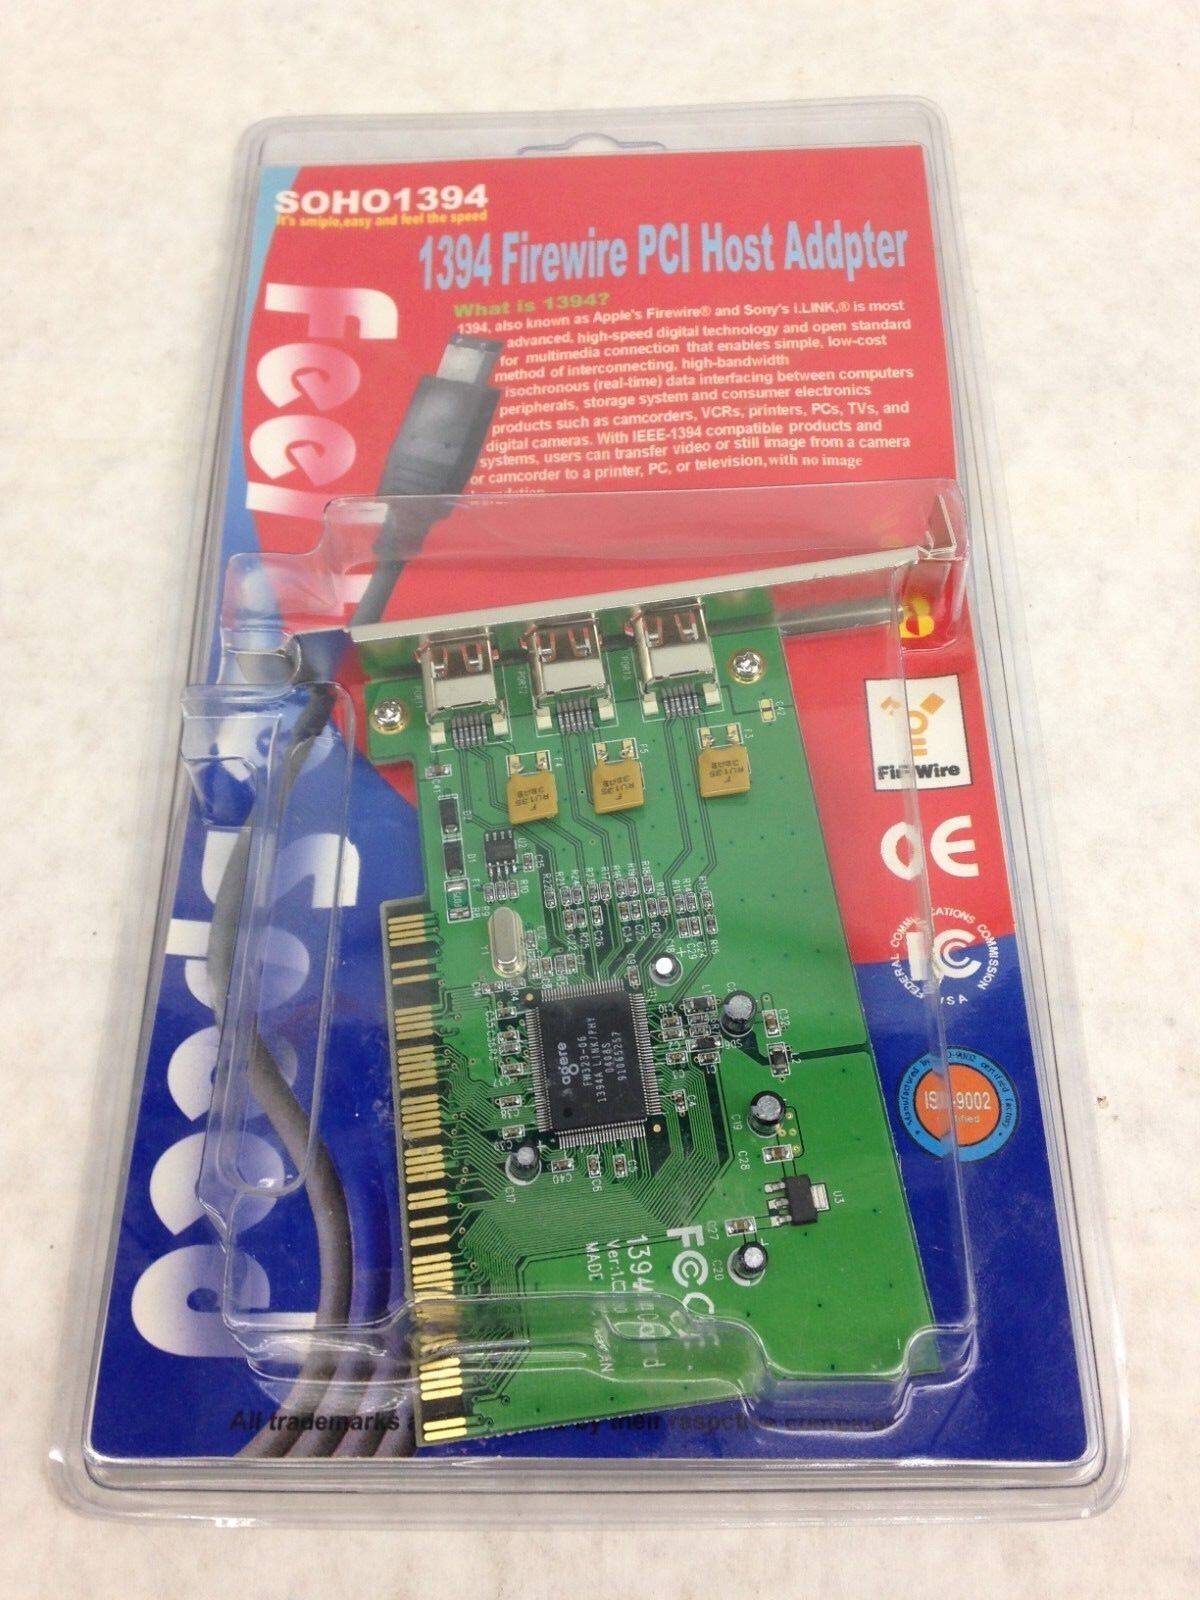 SOHO1394 Firewire PCI Host Adapter 15-102-013